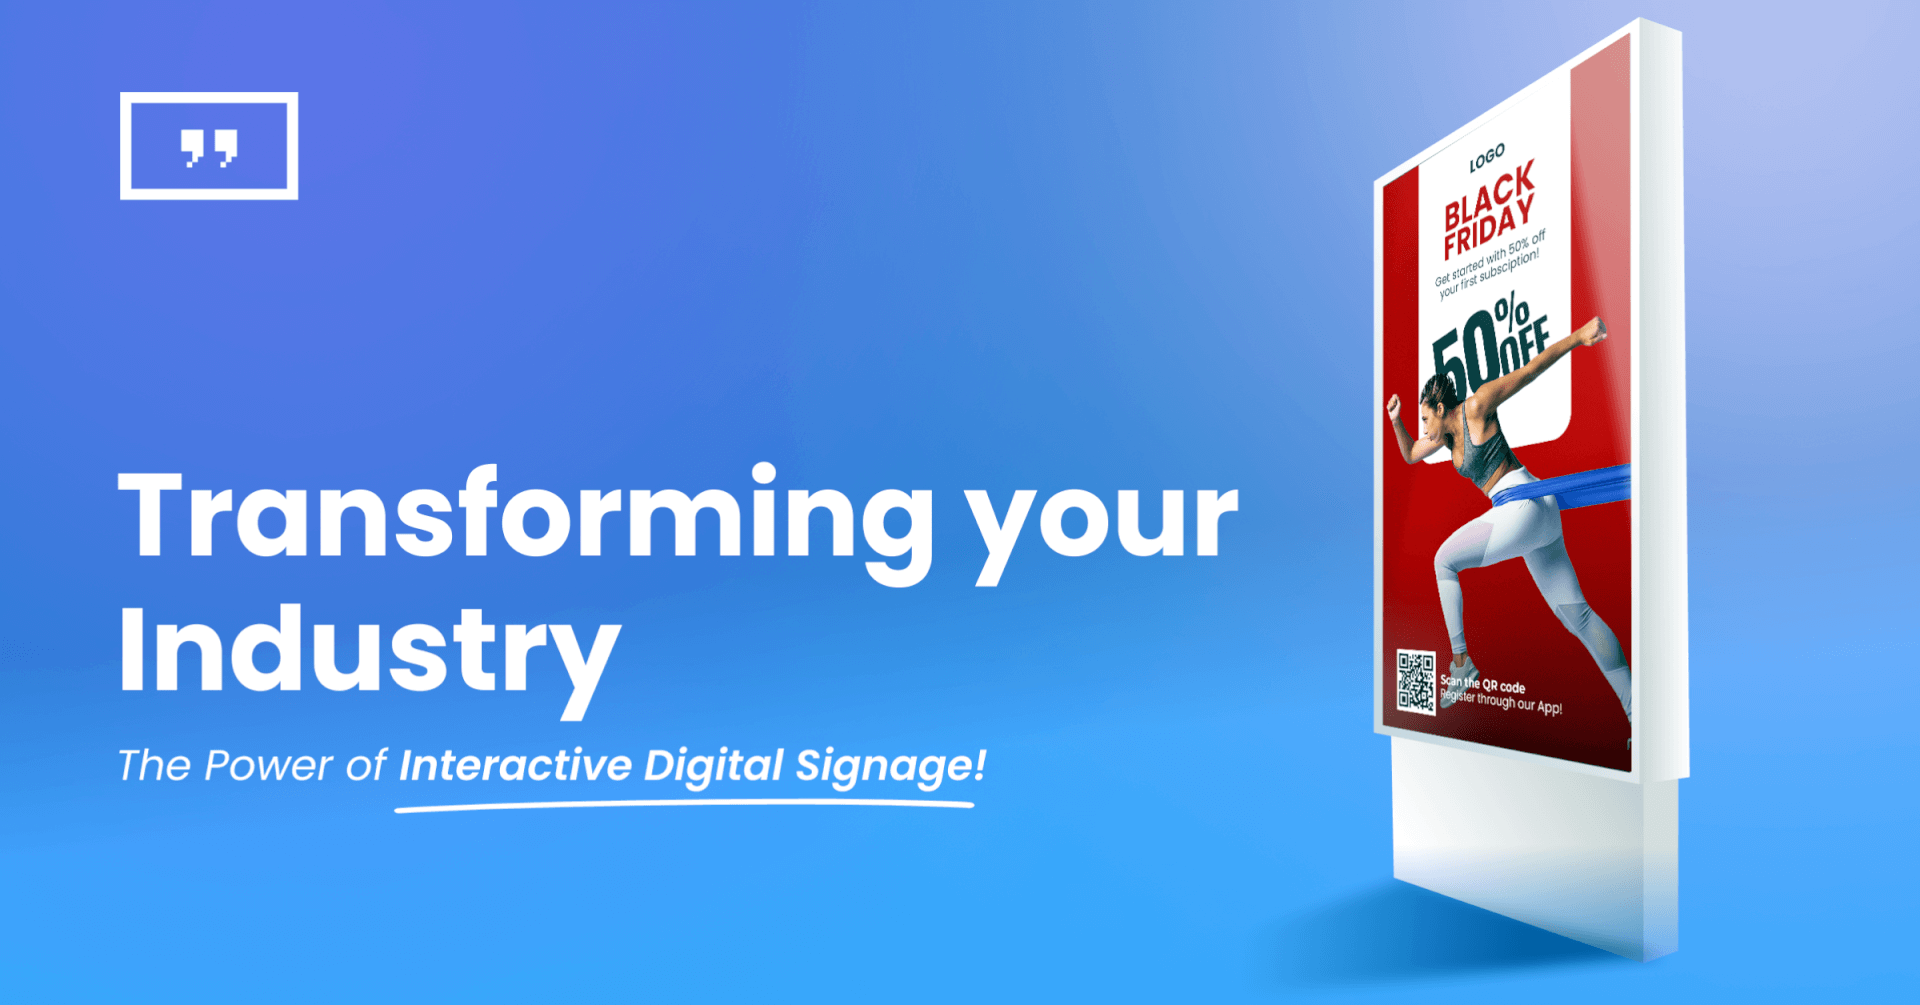 Transforming your Industry digital kiosk